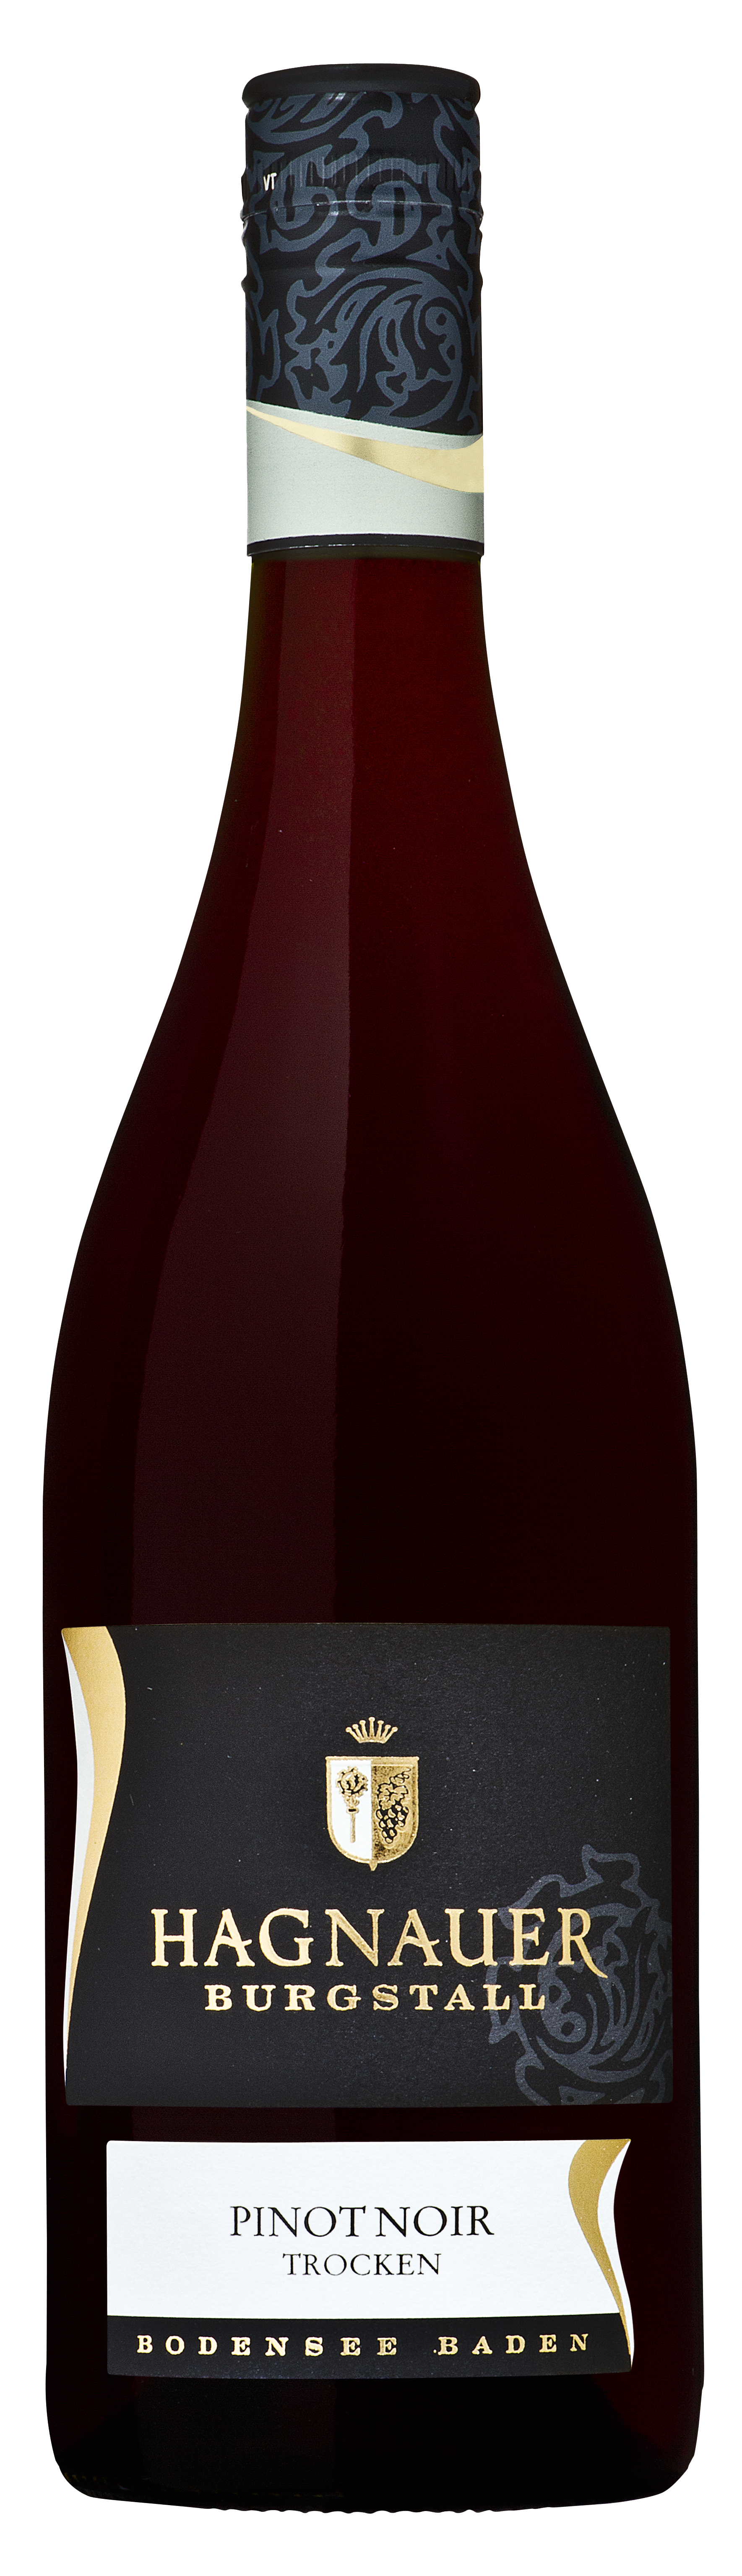 Hagnauer Burgstall Pinot Noir trocken